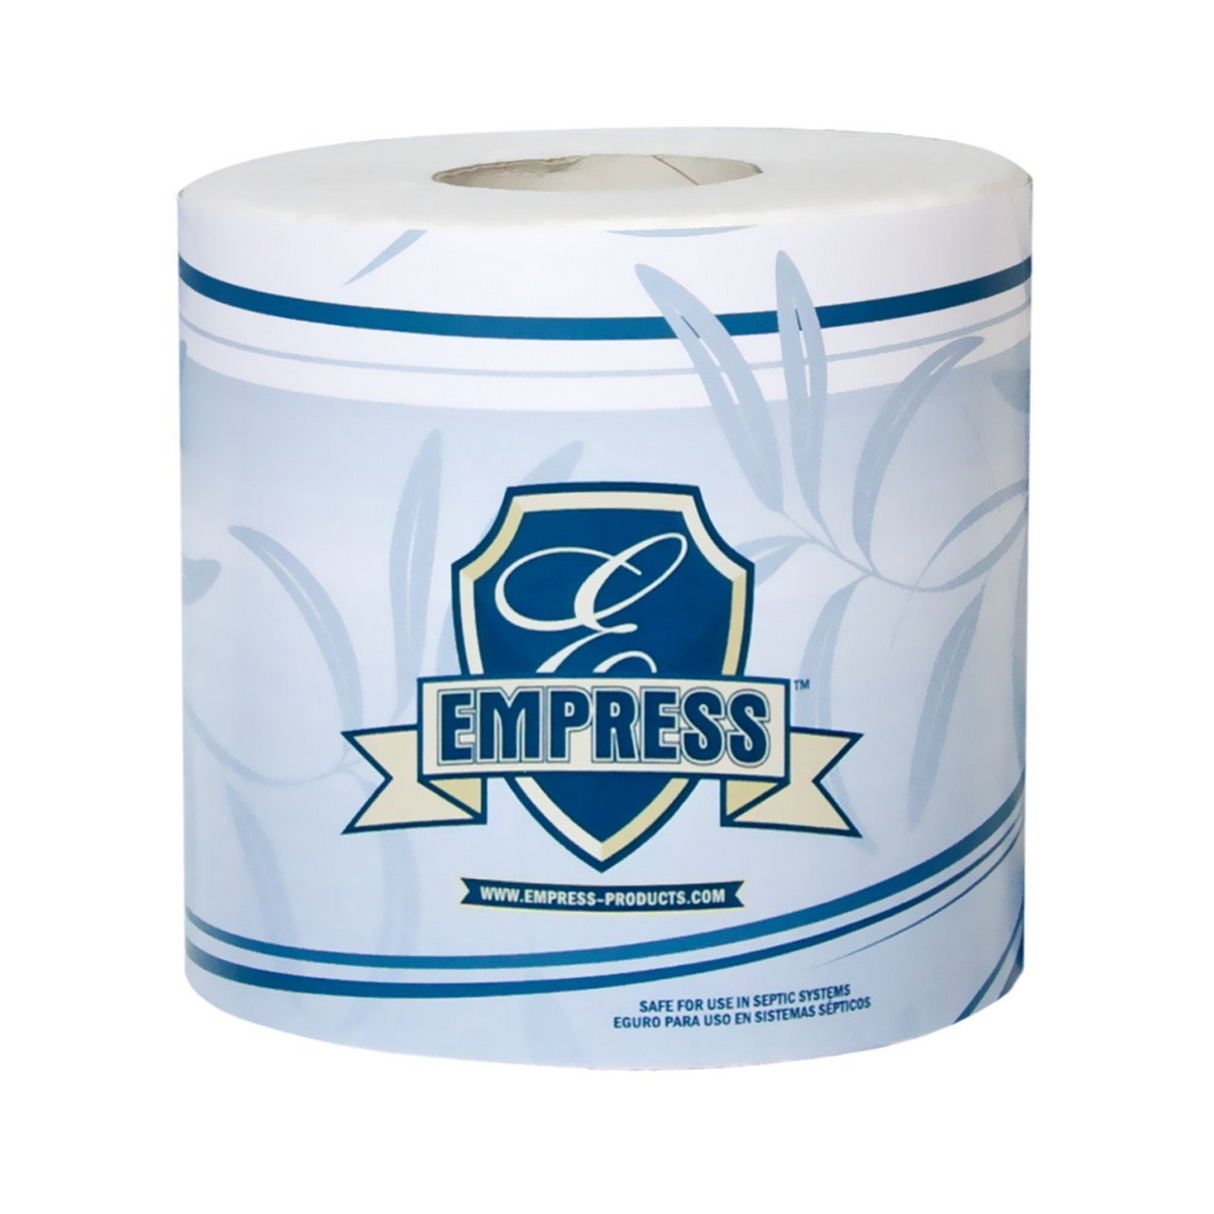 Empress™ Premium 2-Ply Bath Tissue - 4.5" x 3.5" - 96 Rolls per Case - Individually Wrapped